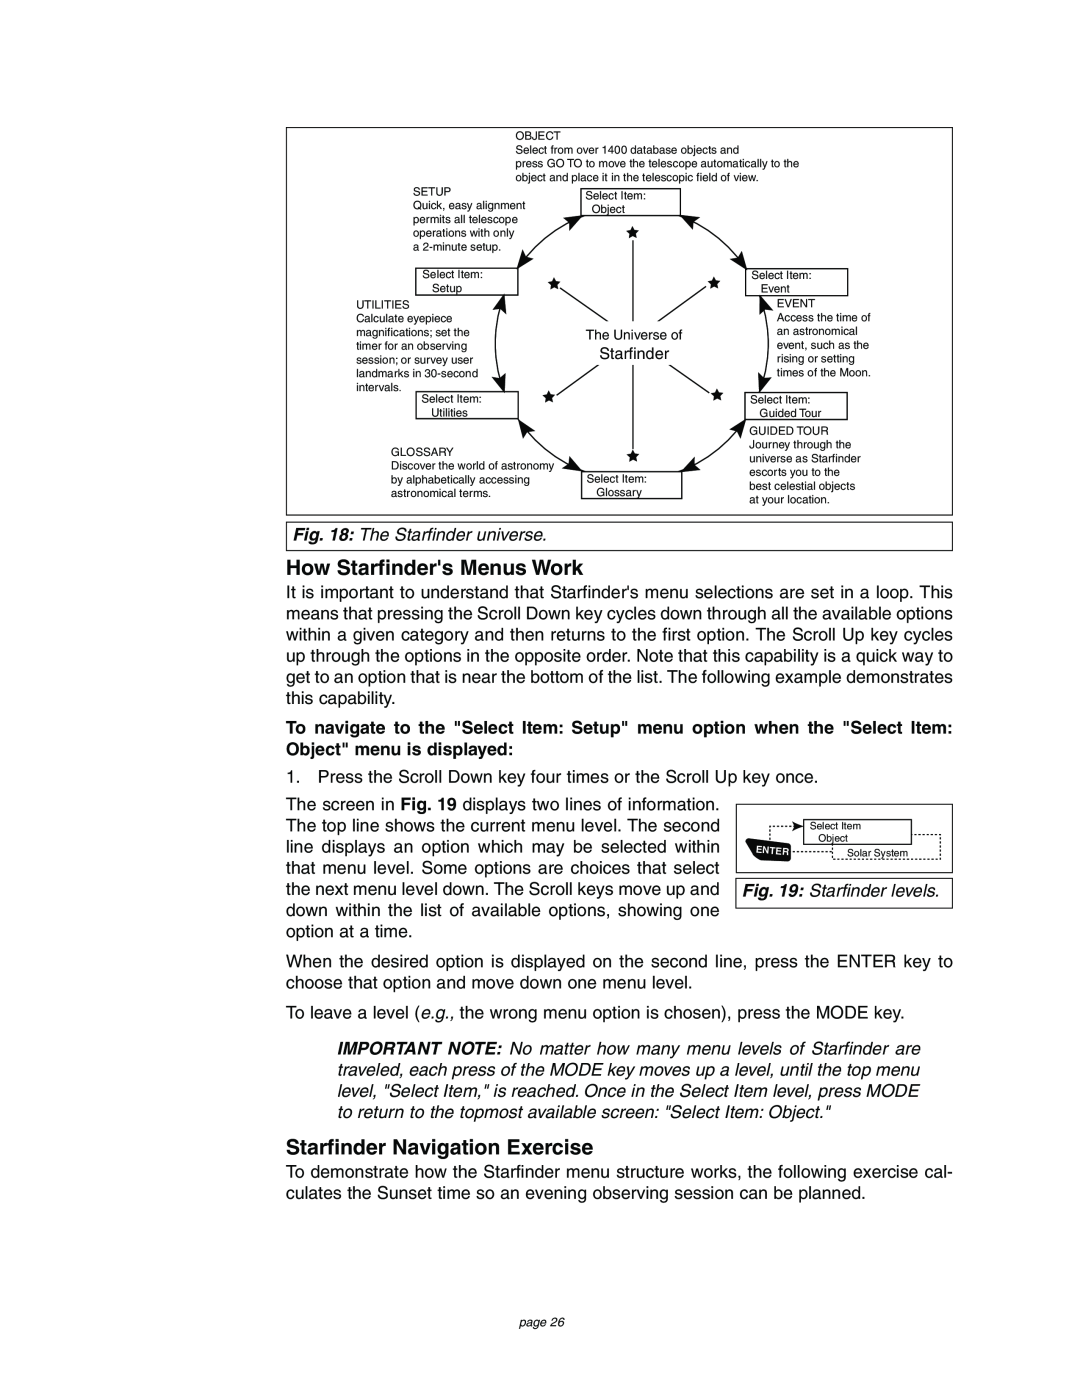 Meade 4504 instruction manual How Starfinders Menus Work, Starfinder Navigation Exercise 